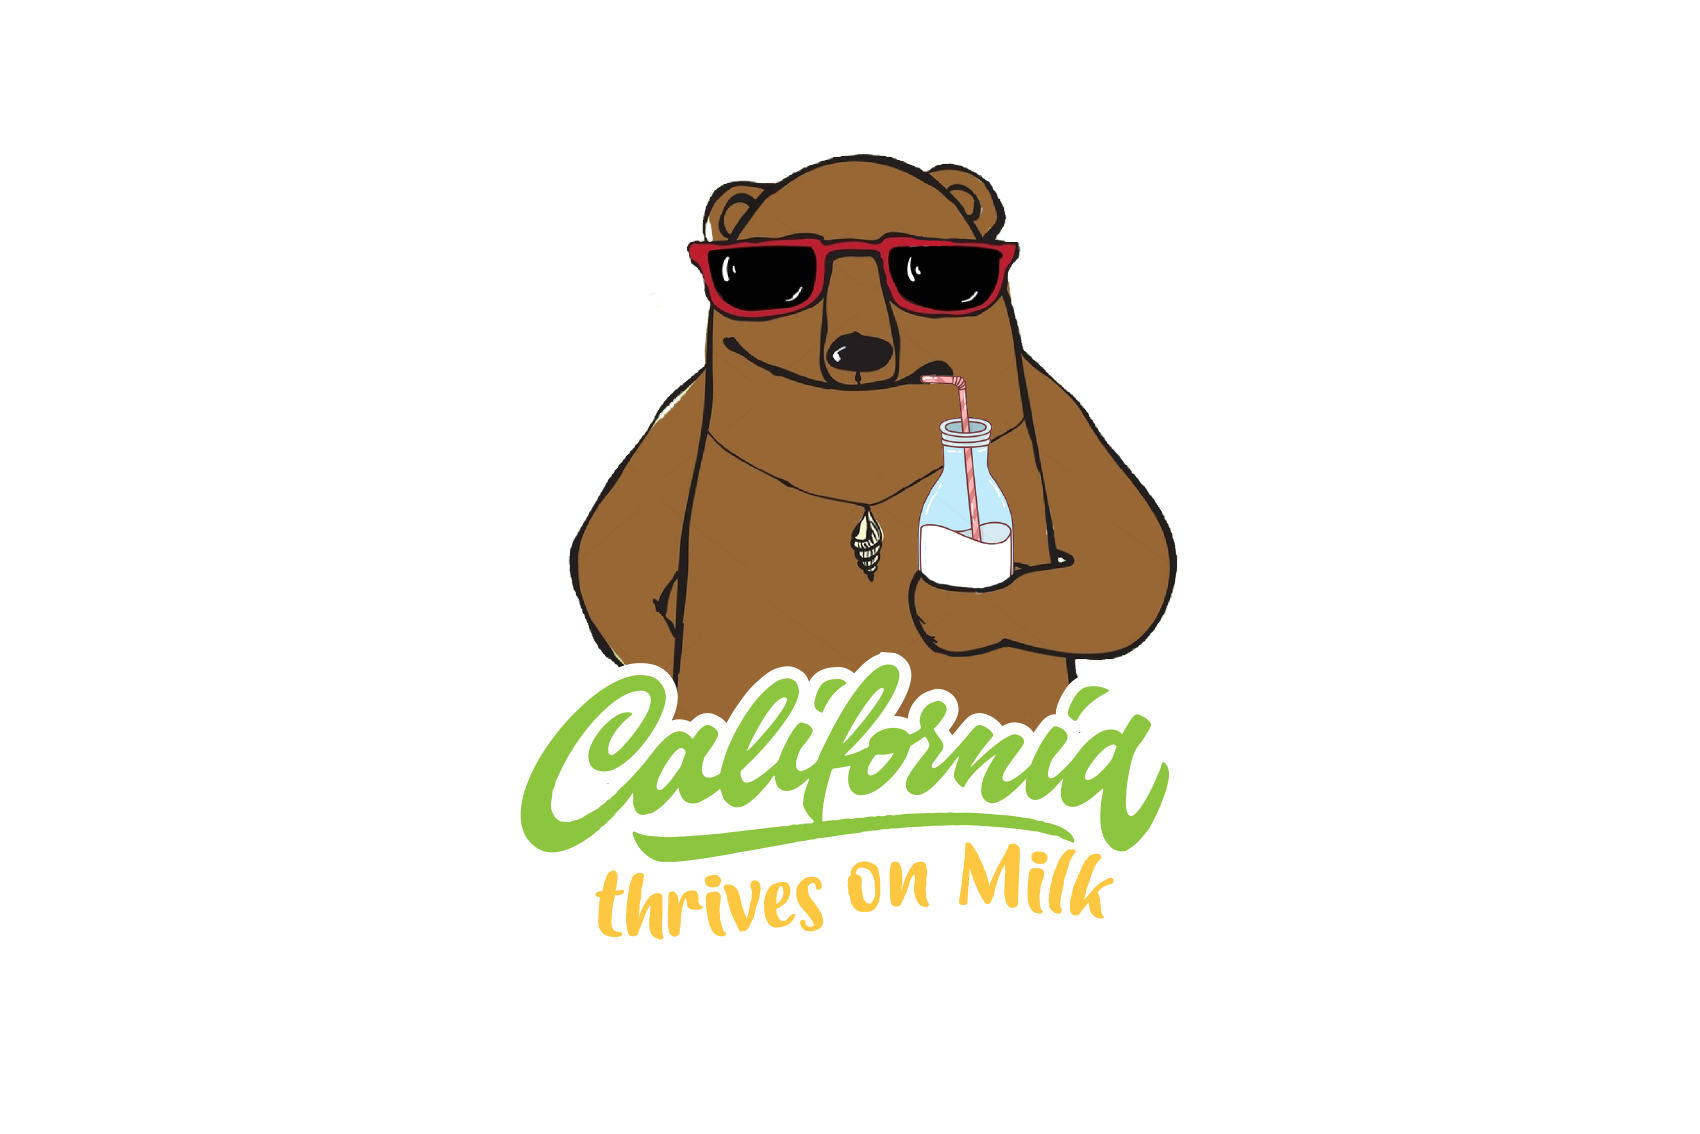 California thrives on milk